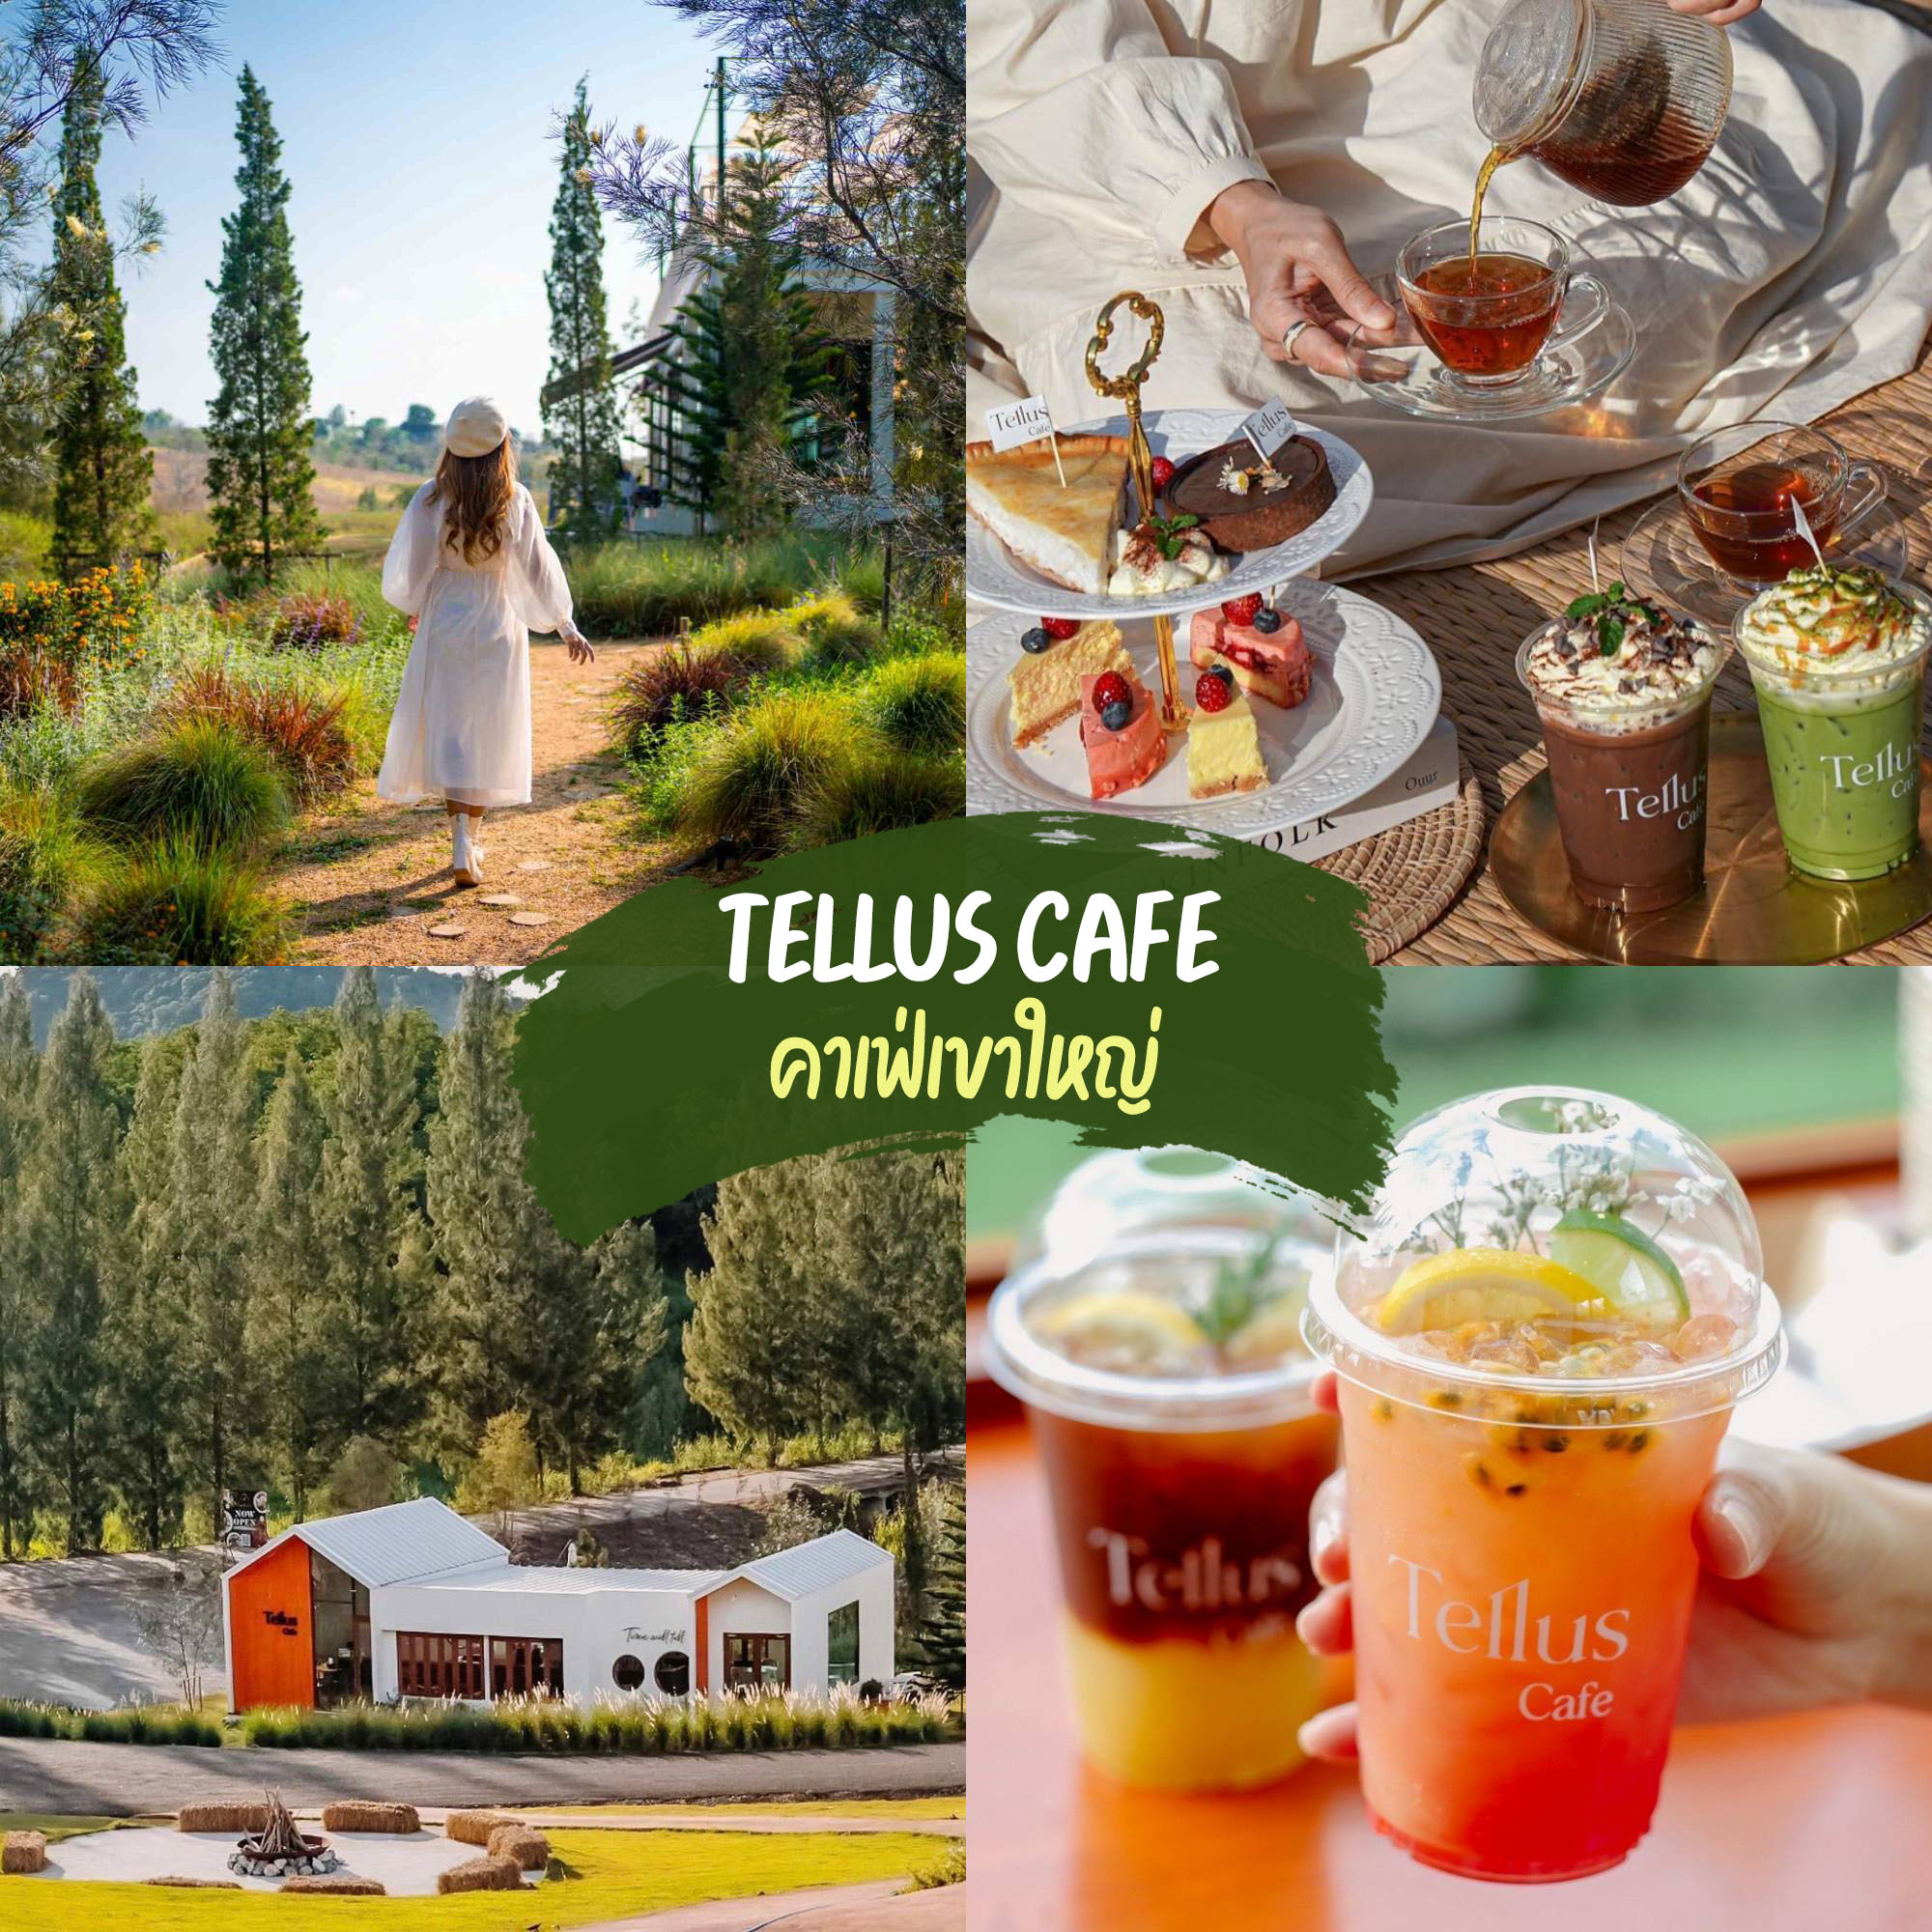 Tellus cafe คาเฟ่เขาใหญ่ คาเฟ่ท่ามกลางธรรมชาติ กลางหุบเขา และต้นสนสวยๆ ฟิล ตปท เหมือนไปยุโรป ตัวร้านถูกออกแบบสไตล์นอร์ดิก